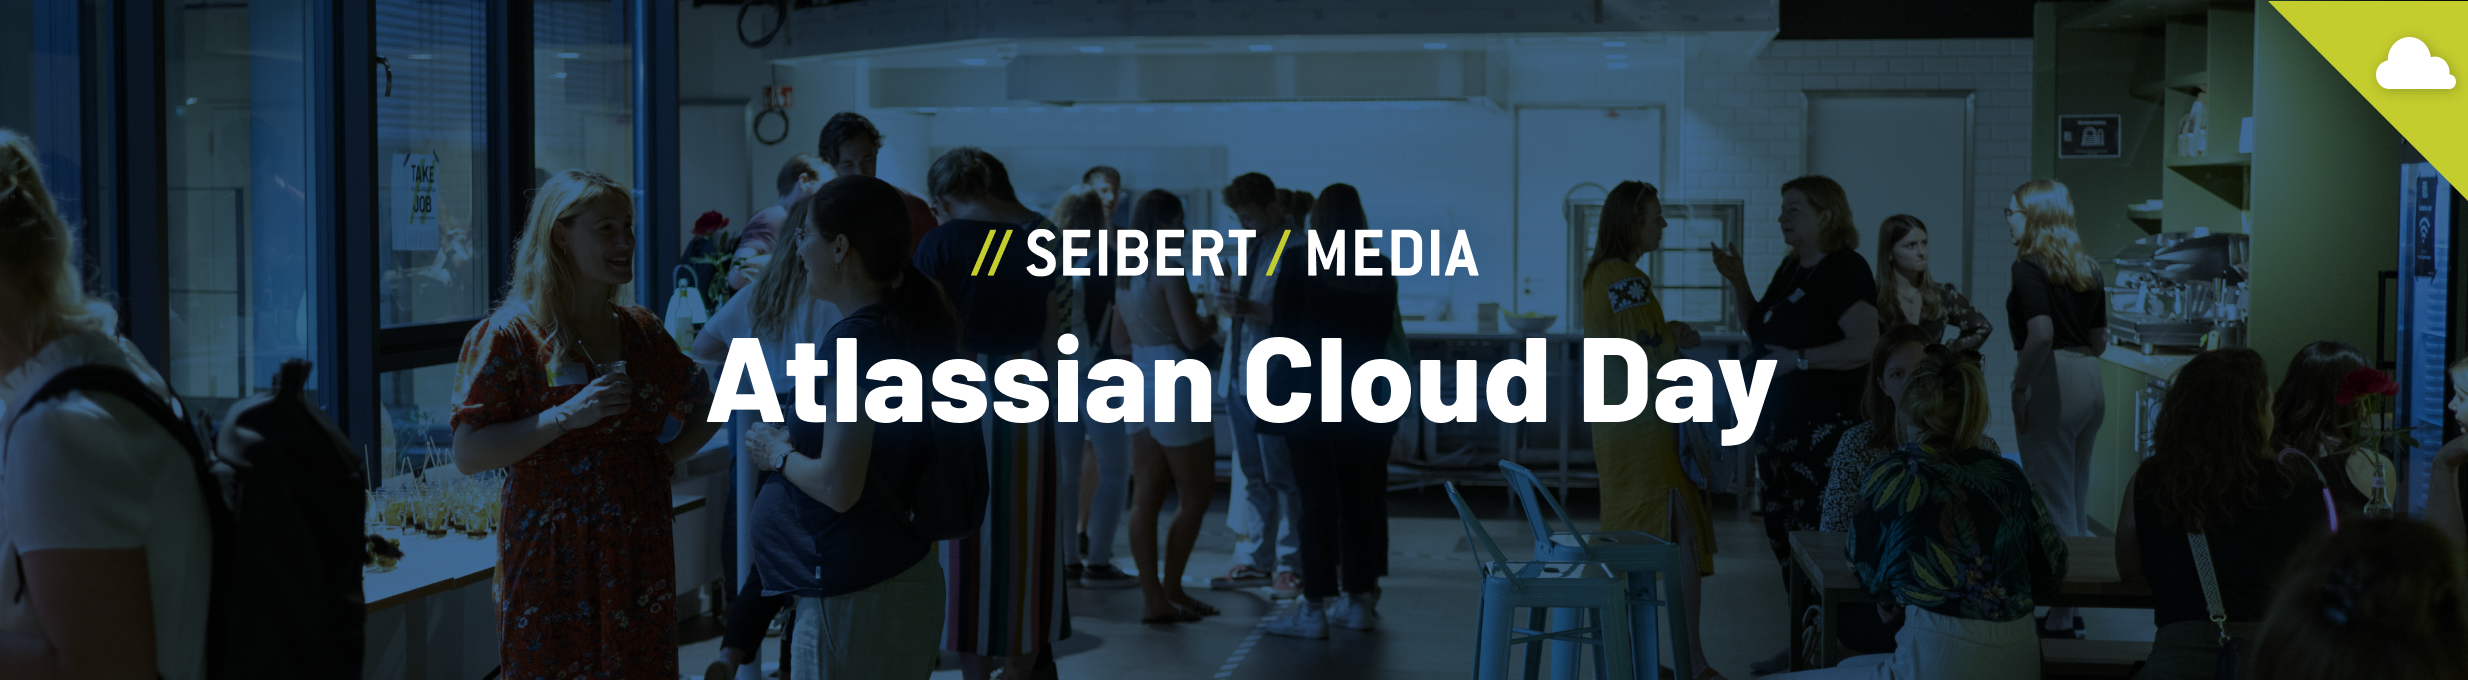 2. Atlassian Cloud Day